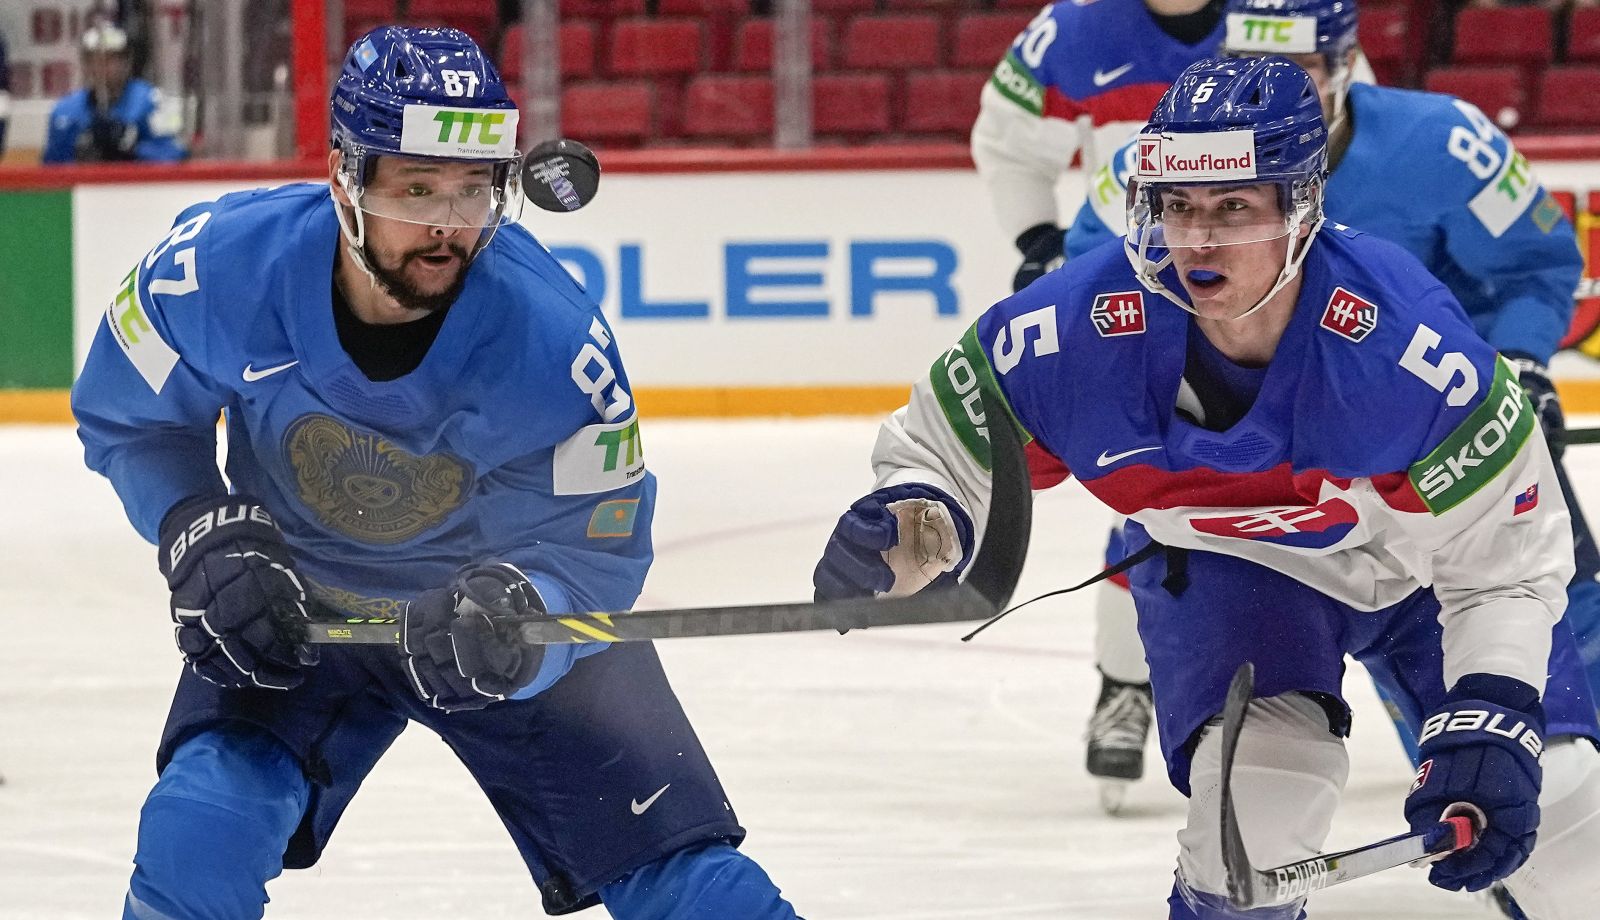 MS v hokeji 2023: Slovenskí hokejisti v pondelok nastúpia proti Kanade aj so Šimonom Nemcom